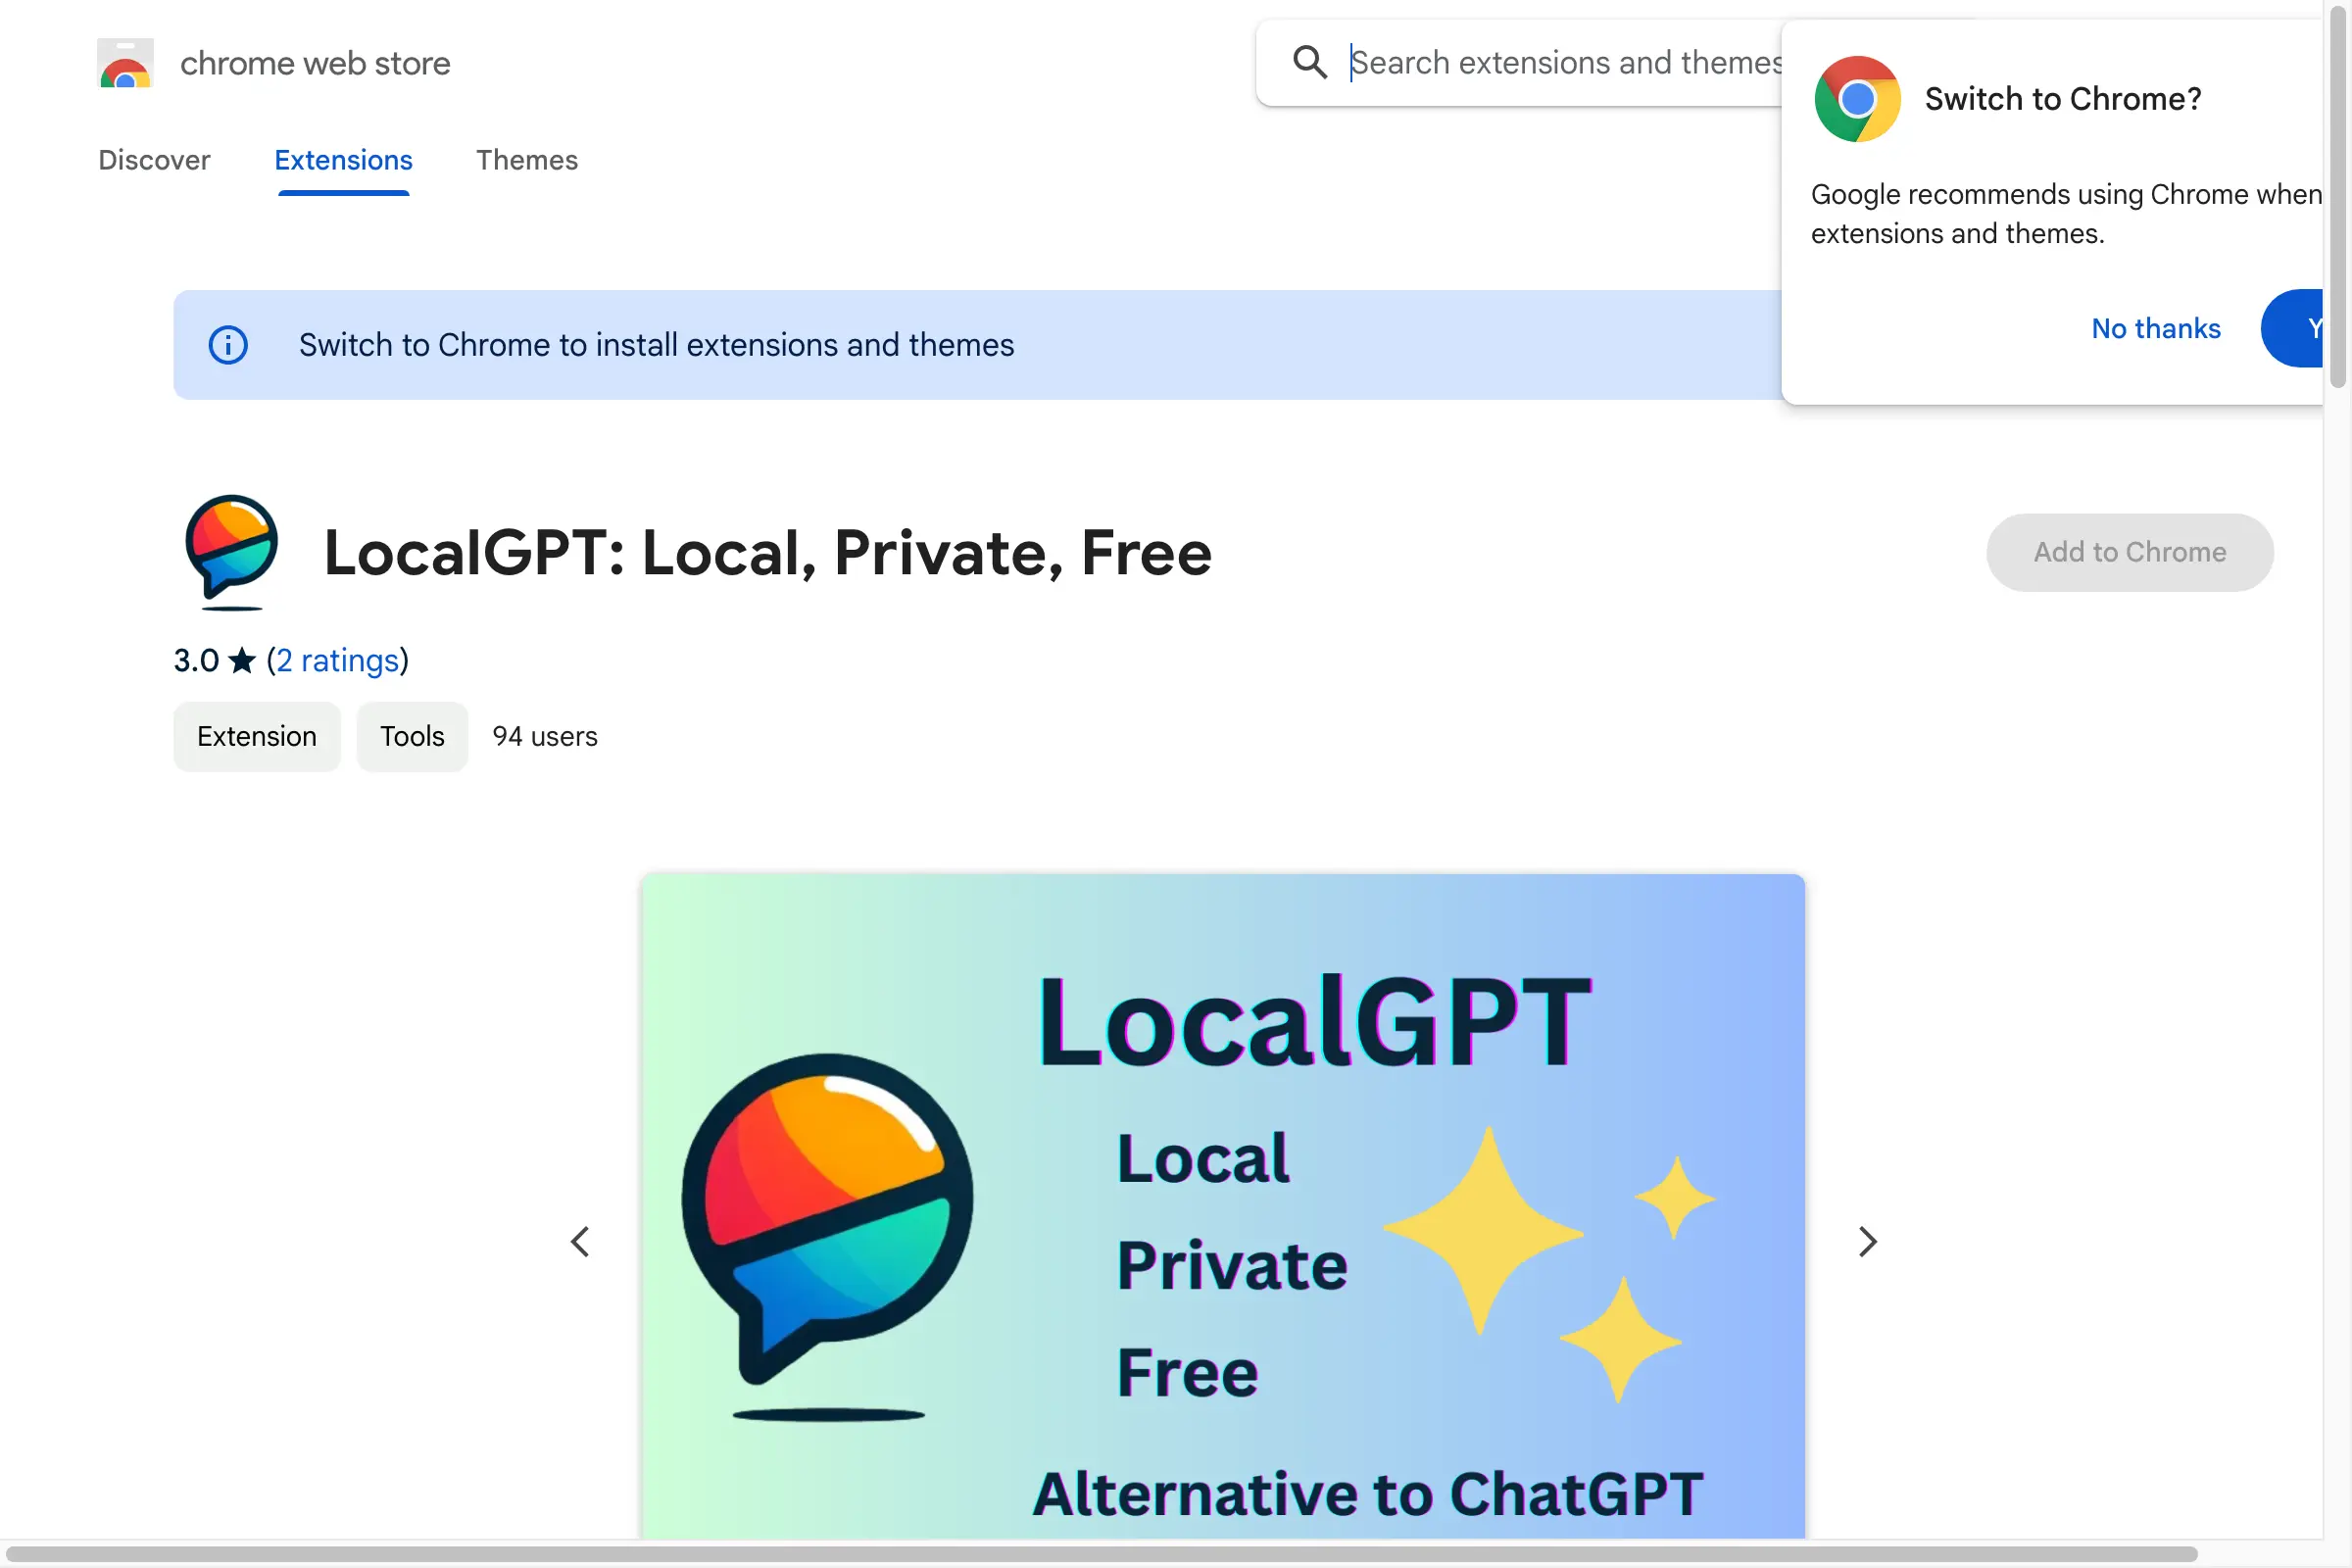 LocalGPT: Local, Private, Free